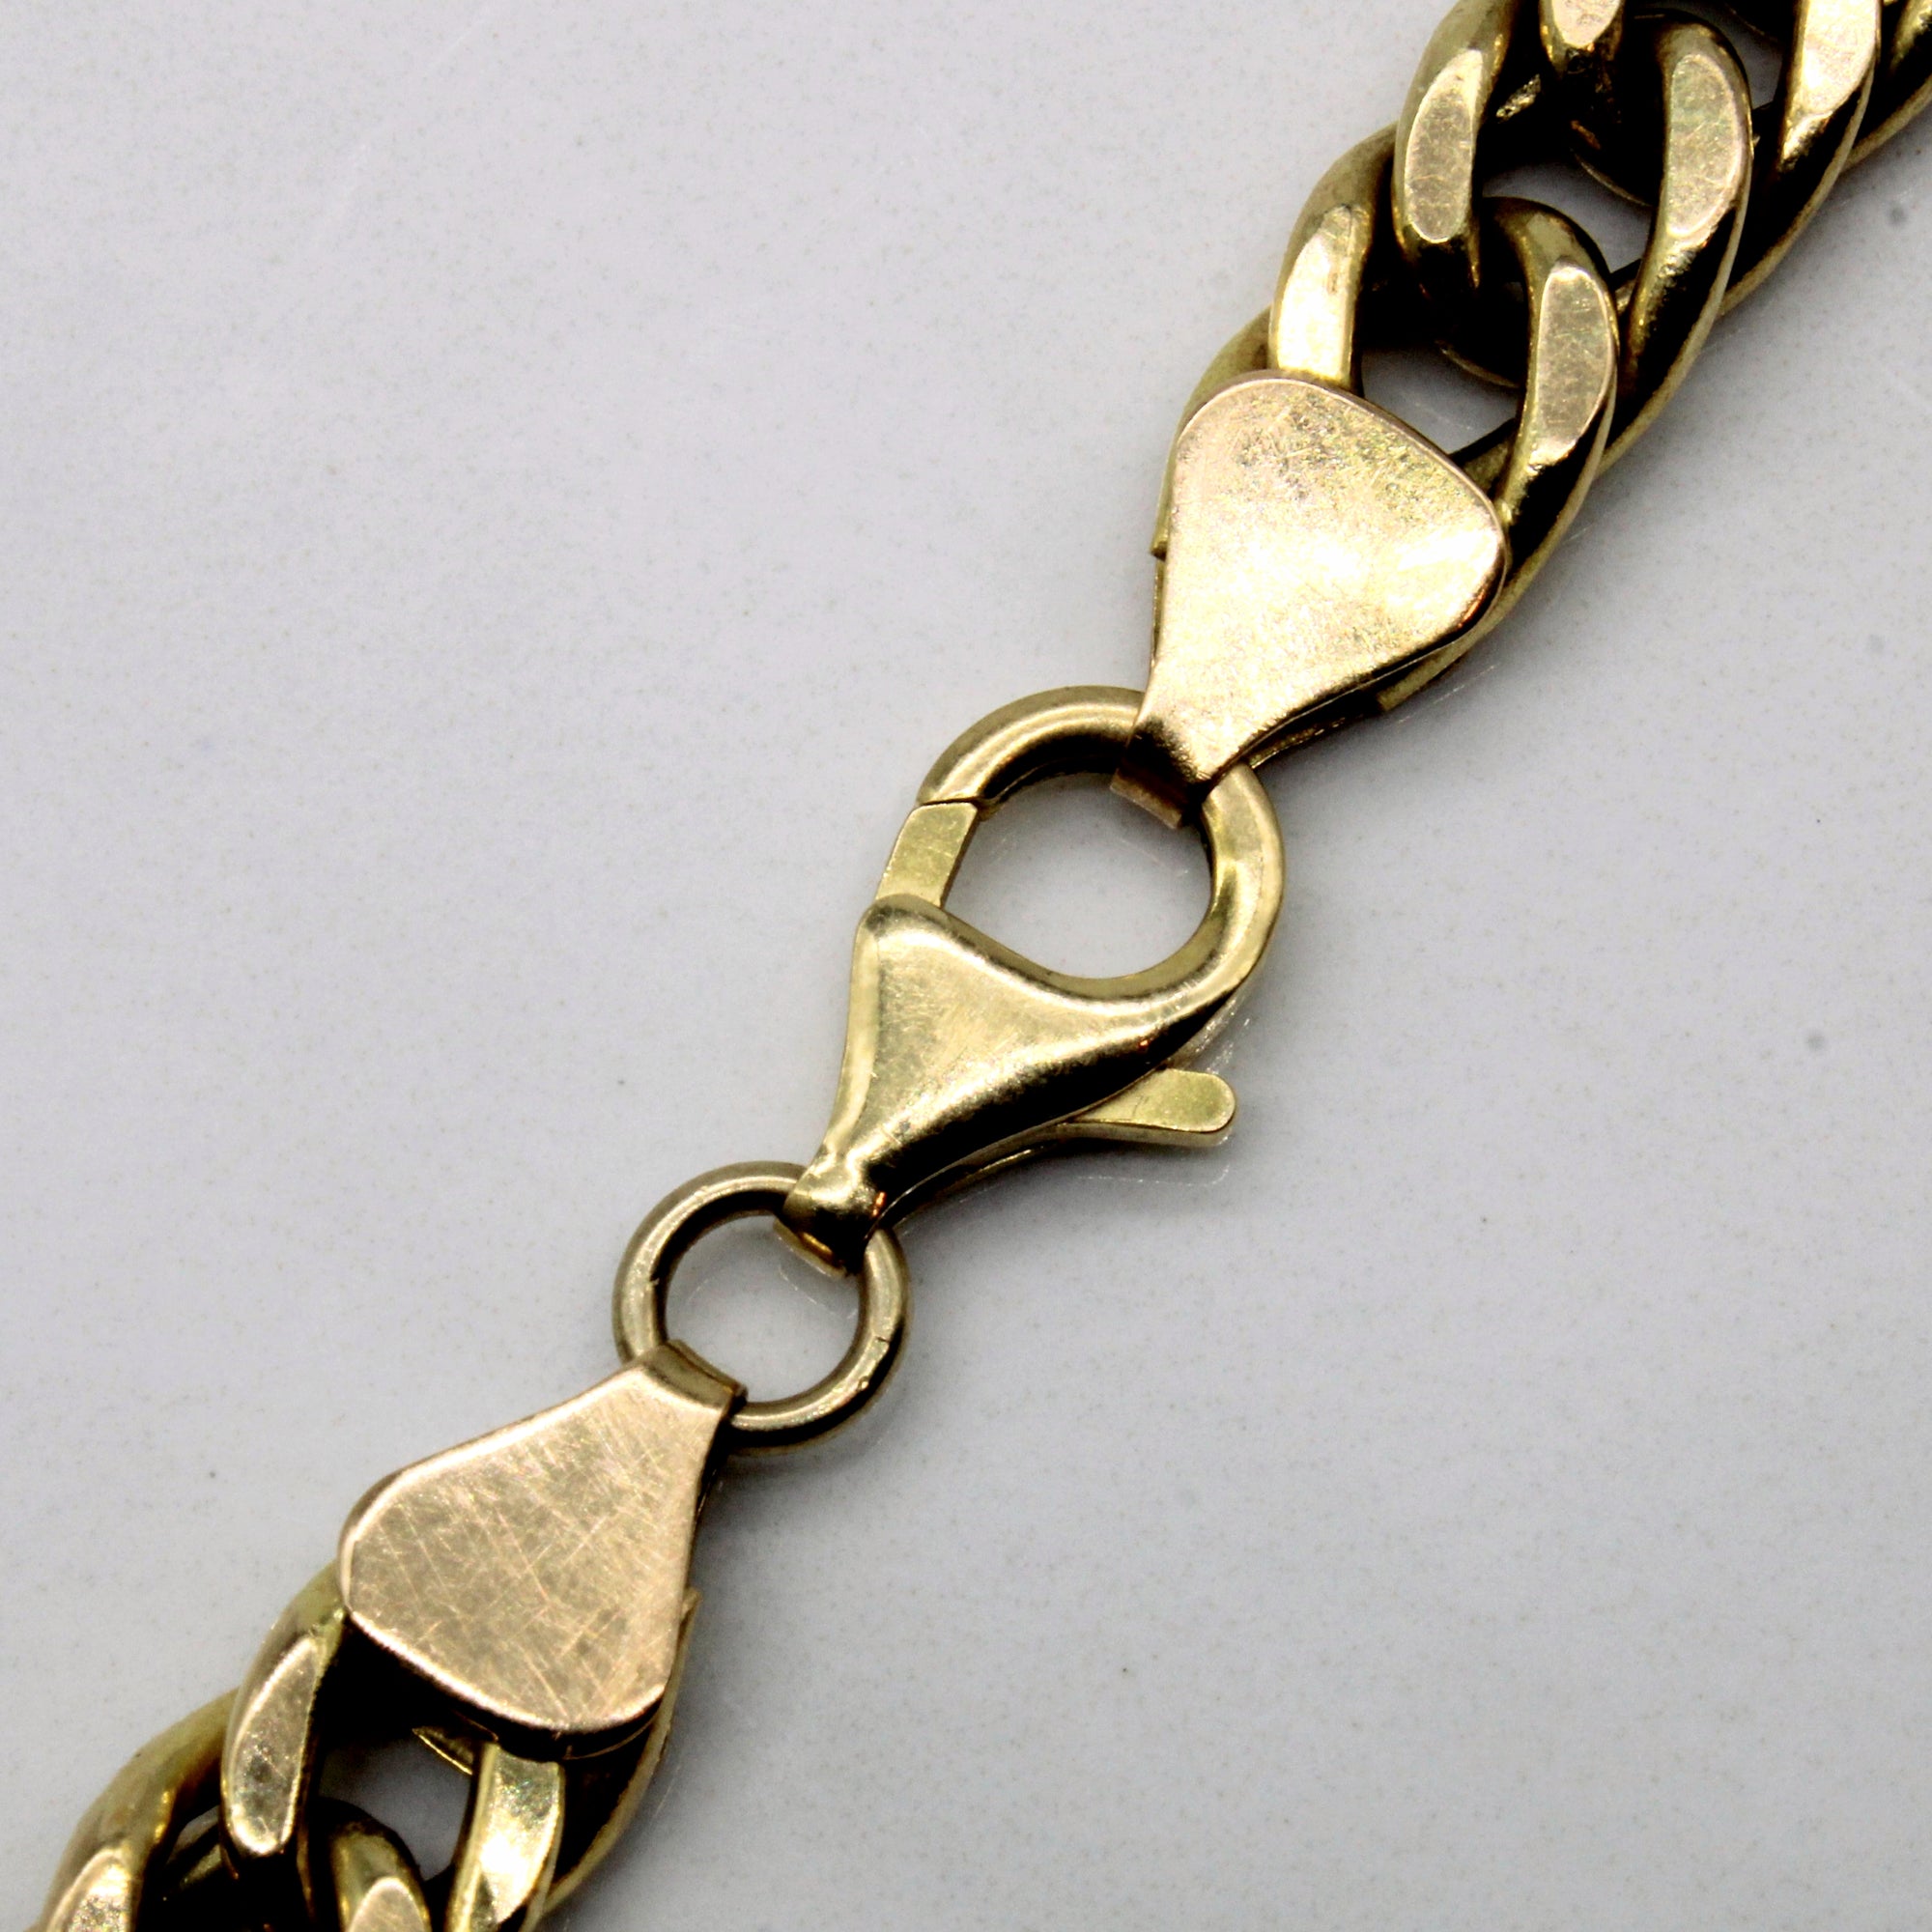 14k Tri-Tone Gold Necklace | 16